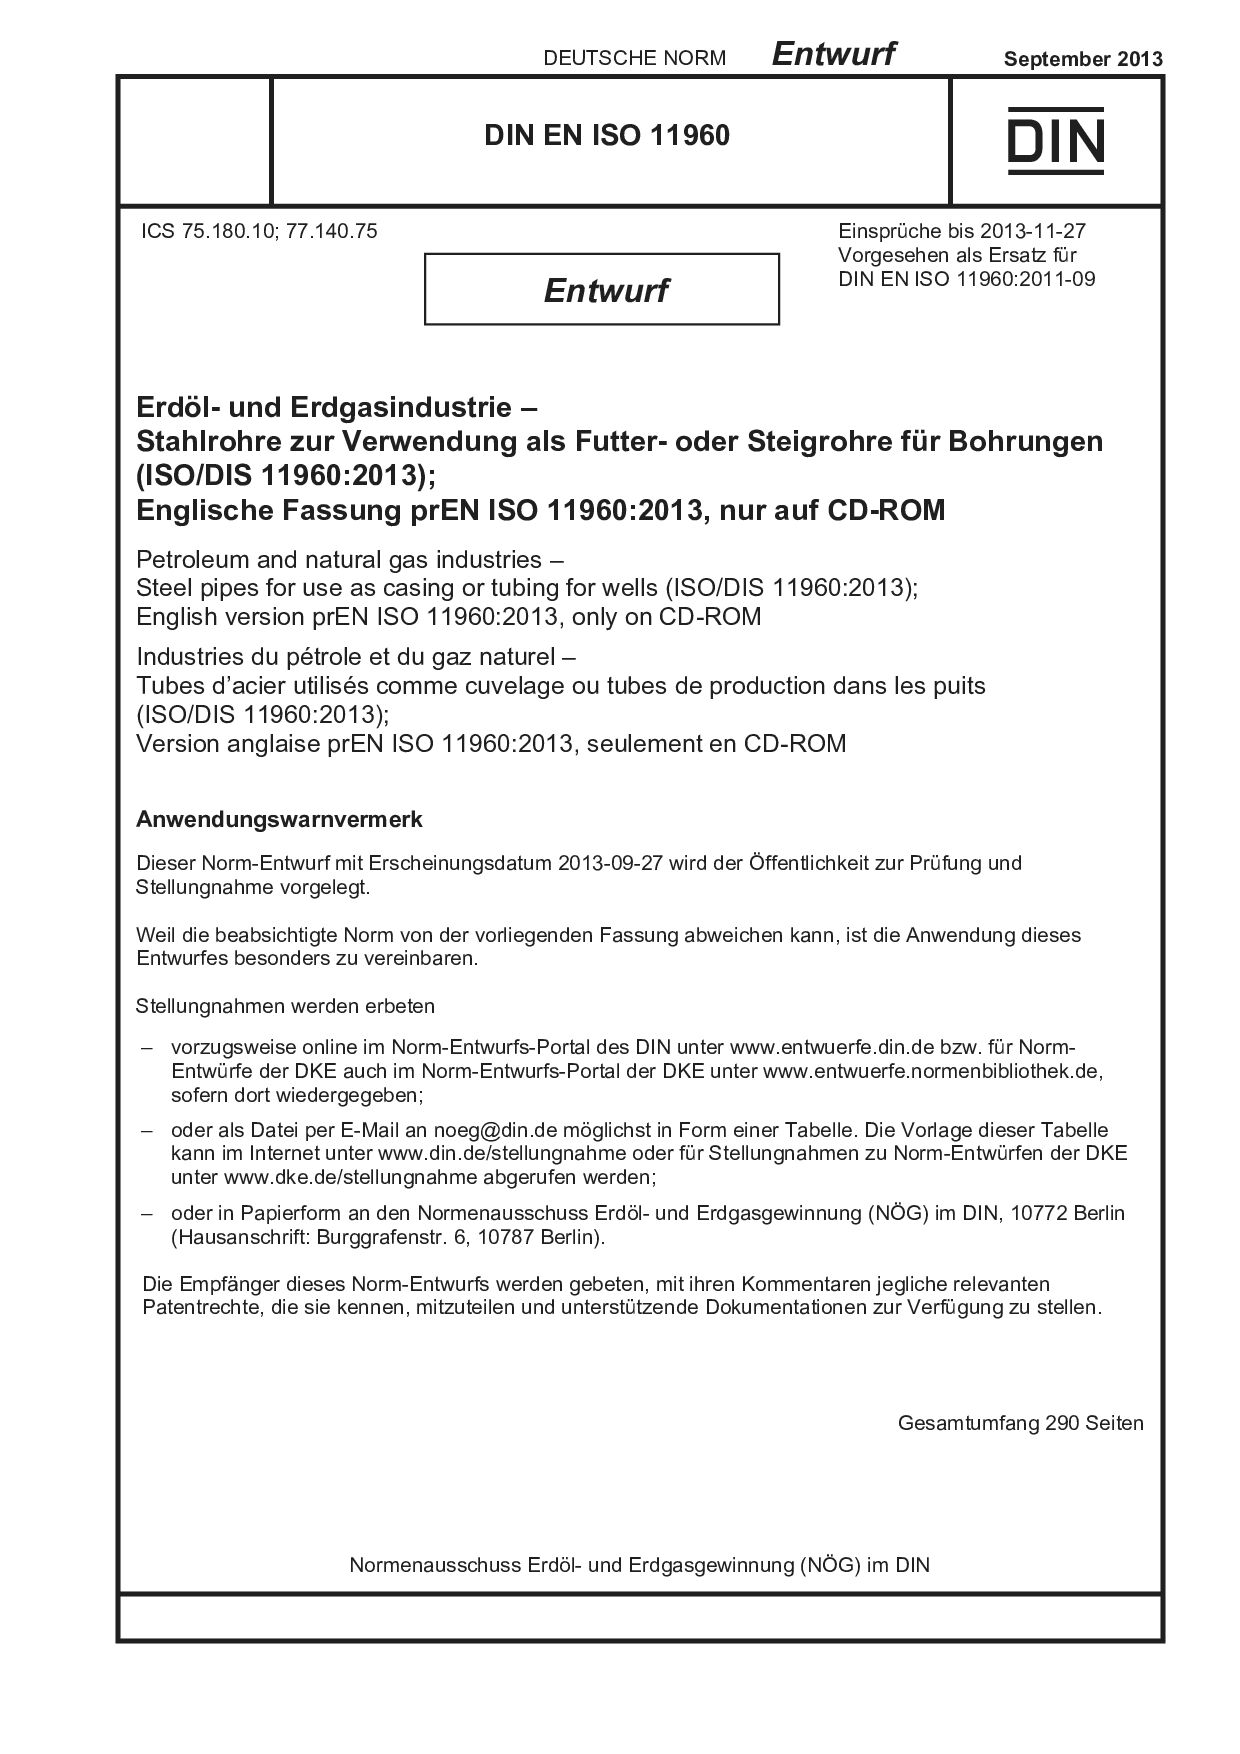 DIN EN ISO 11960 E:2013-09